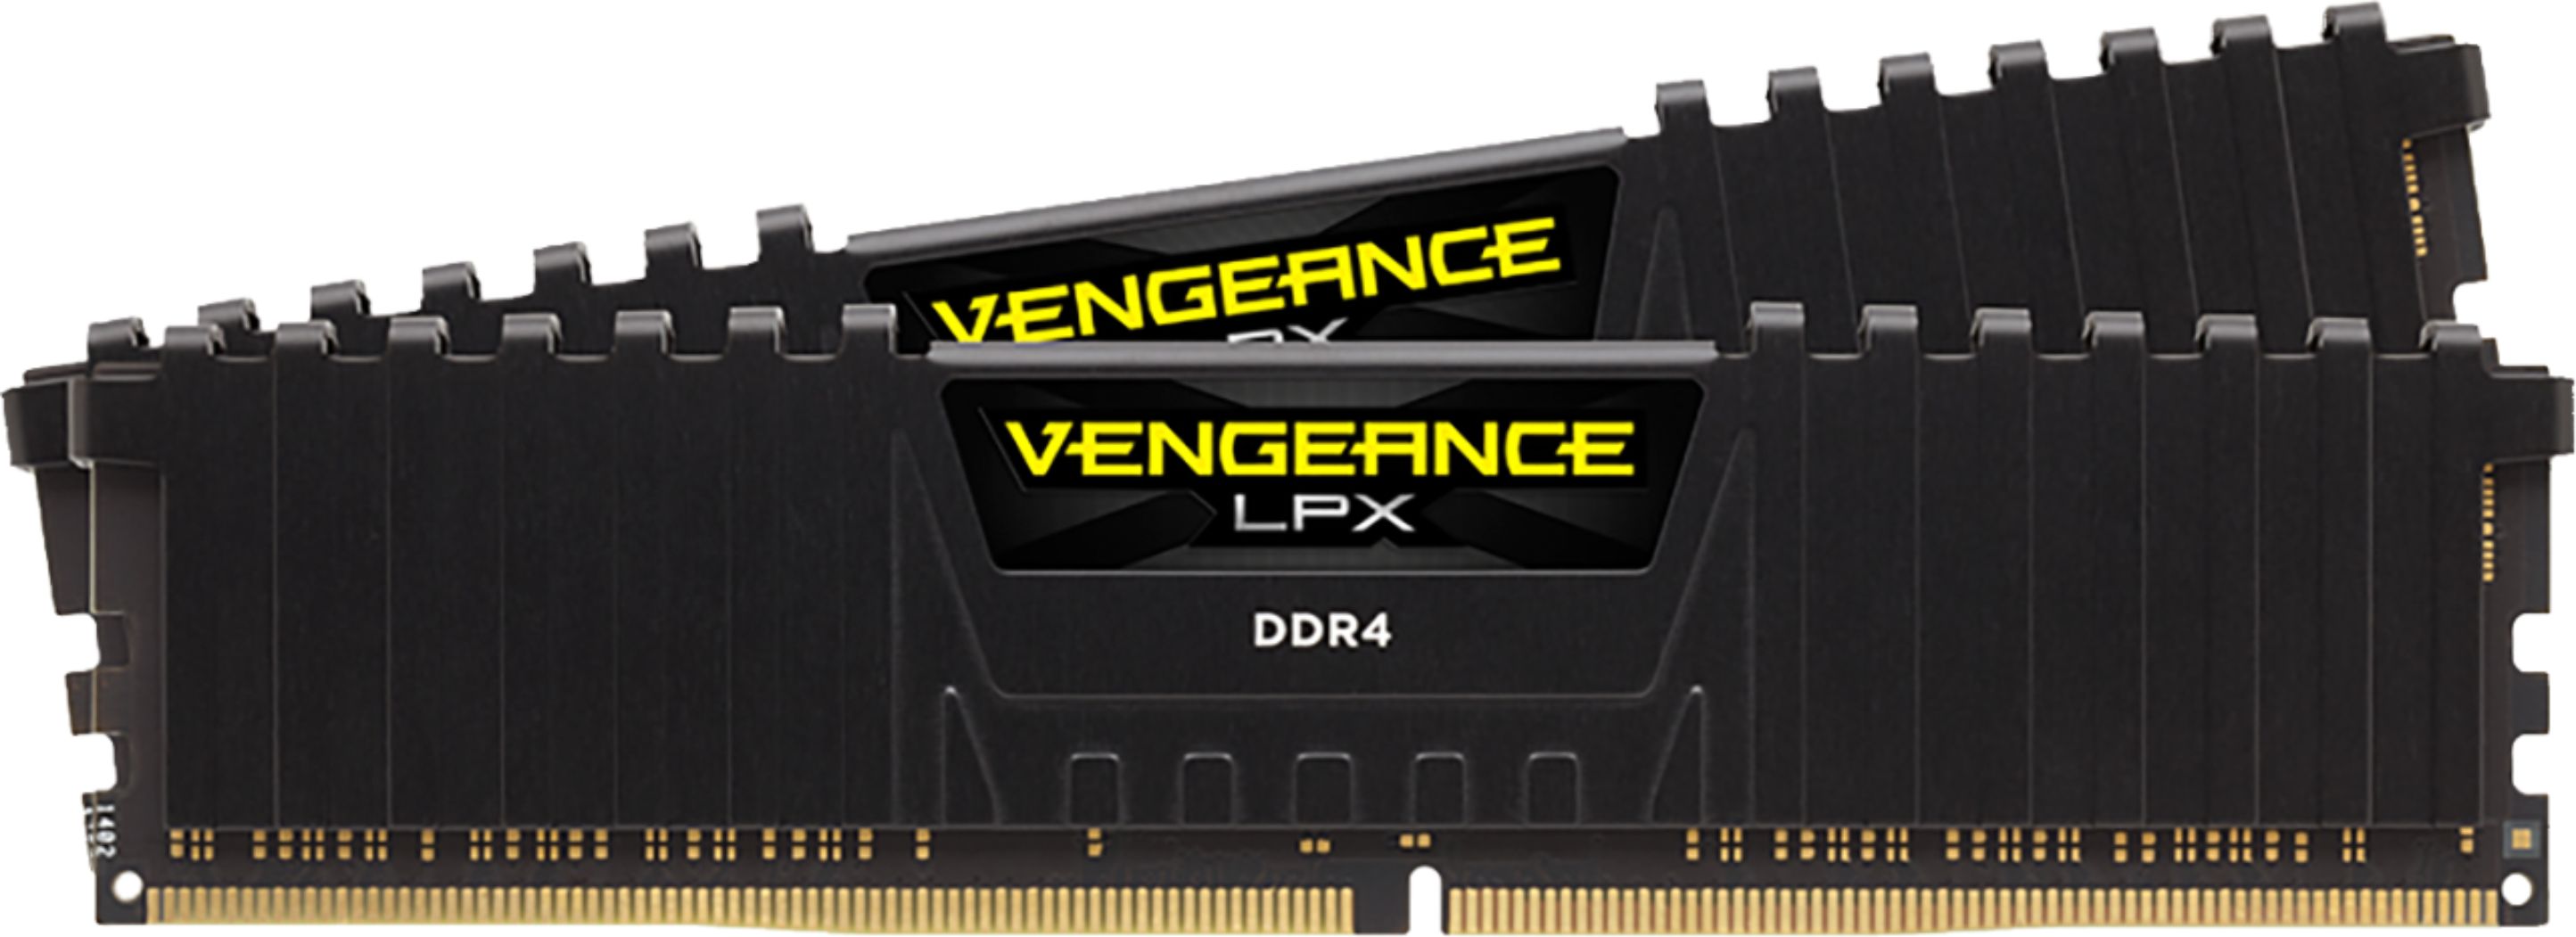 Descarte Probar soltar CORSAIR VENGEANCE LPX 16GB (2PK x 8GB) 3600MHz DDR4 C18 DIMM Desktop Memory  Black CMK16GX4M2D3600C18 - Best Buy